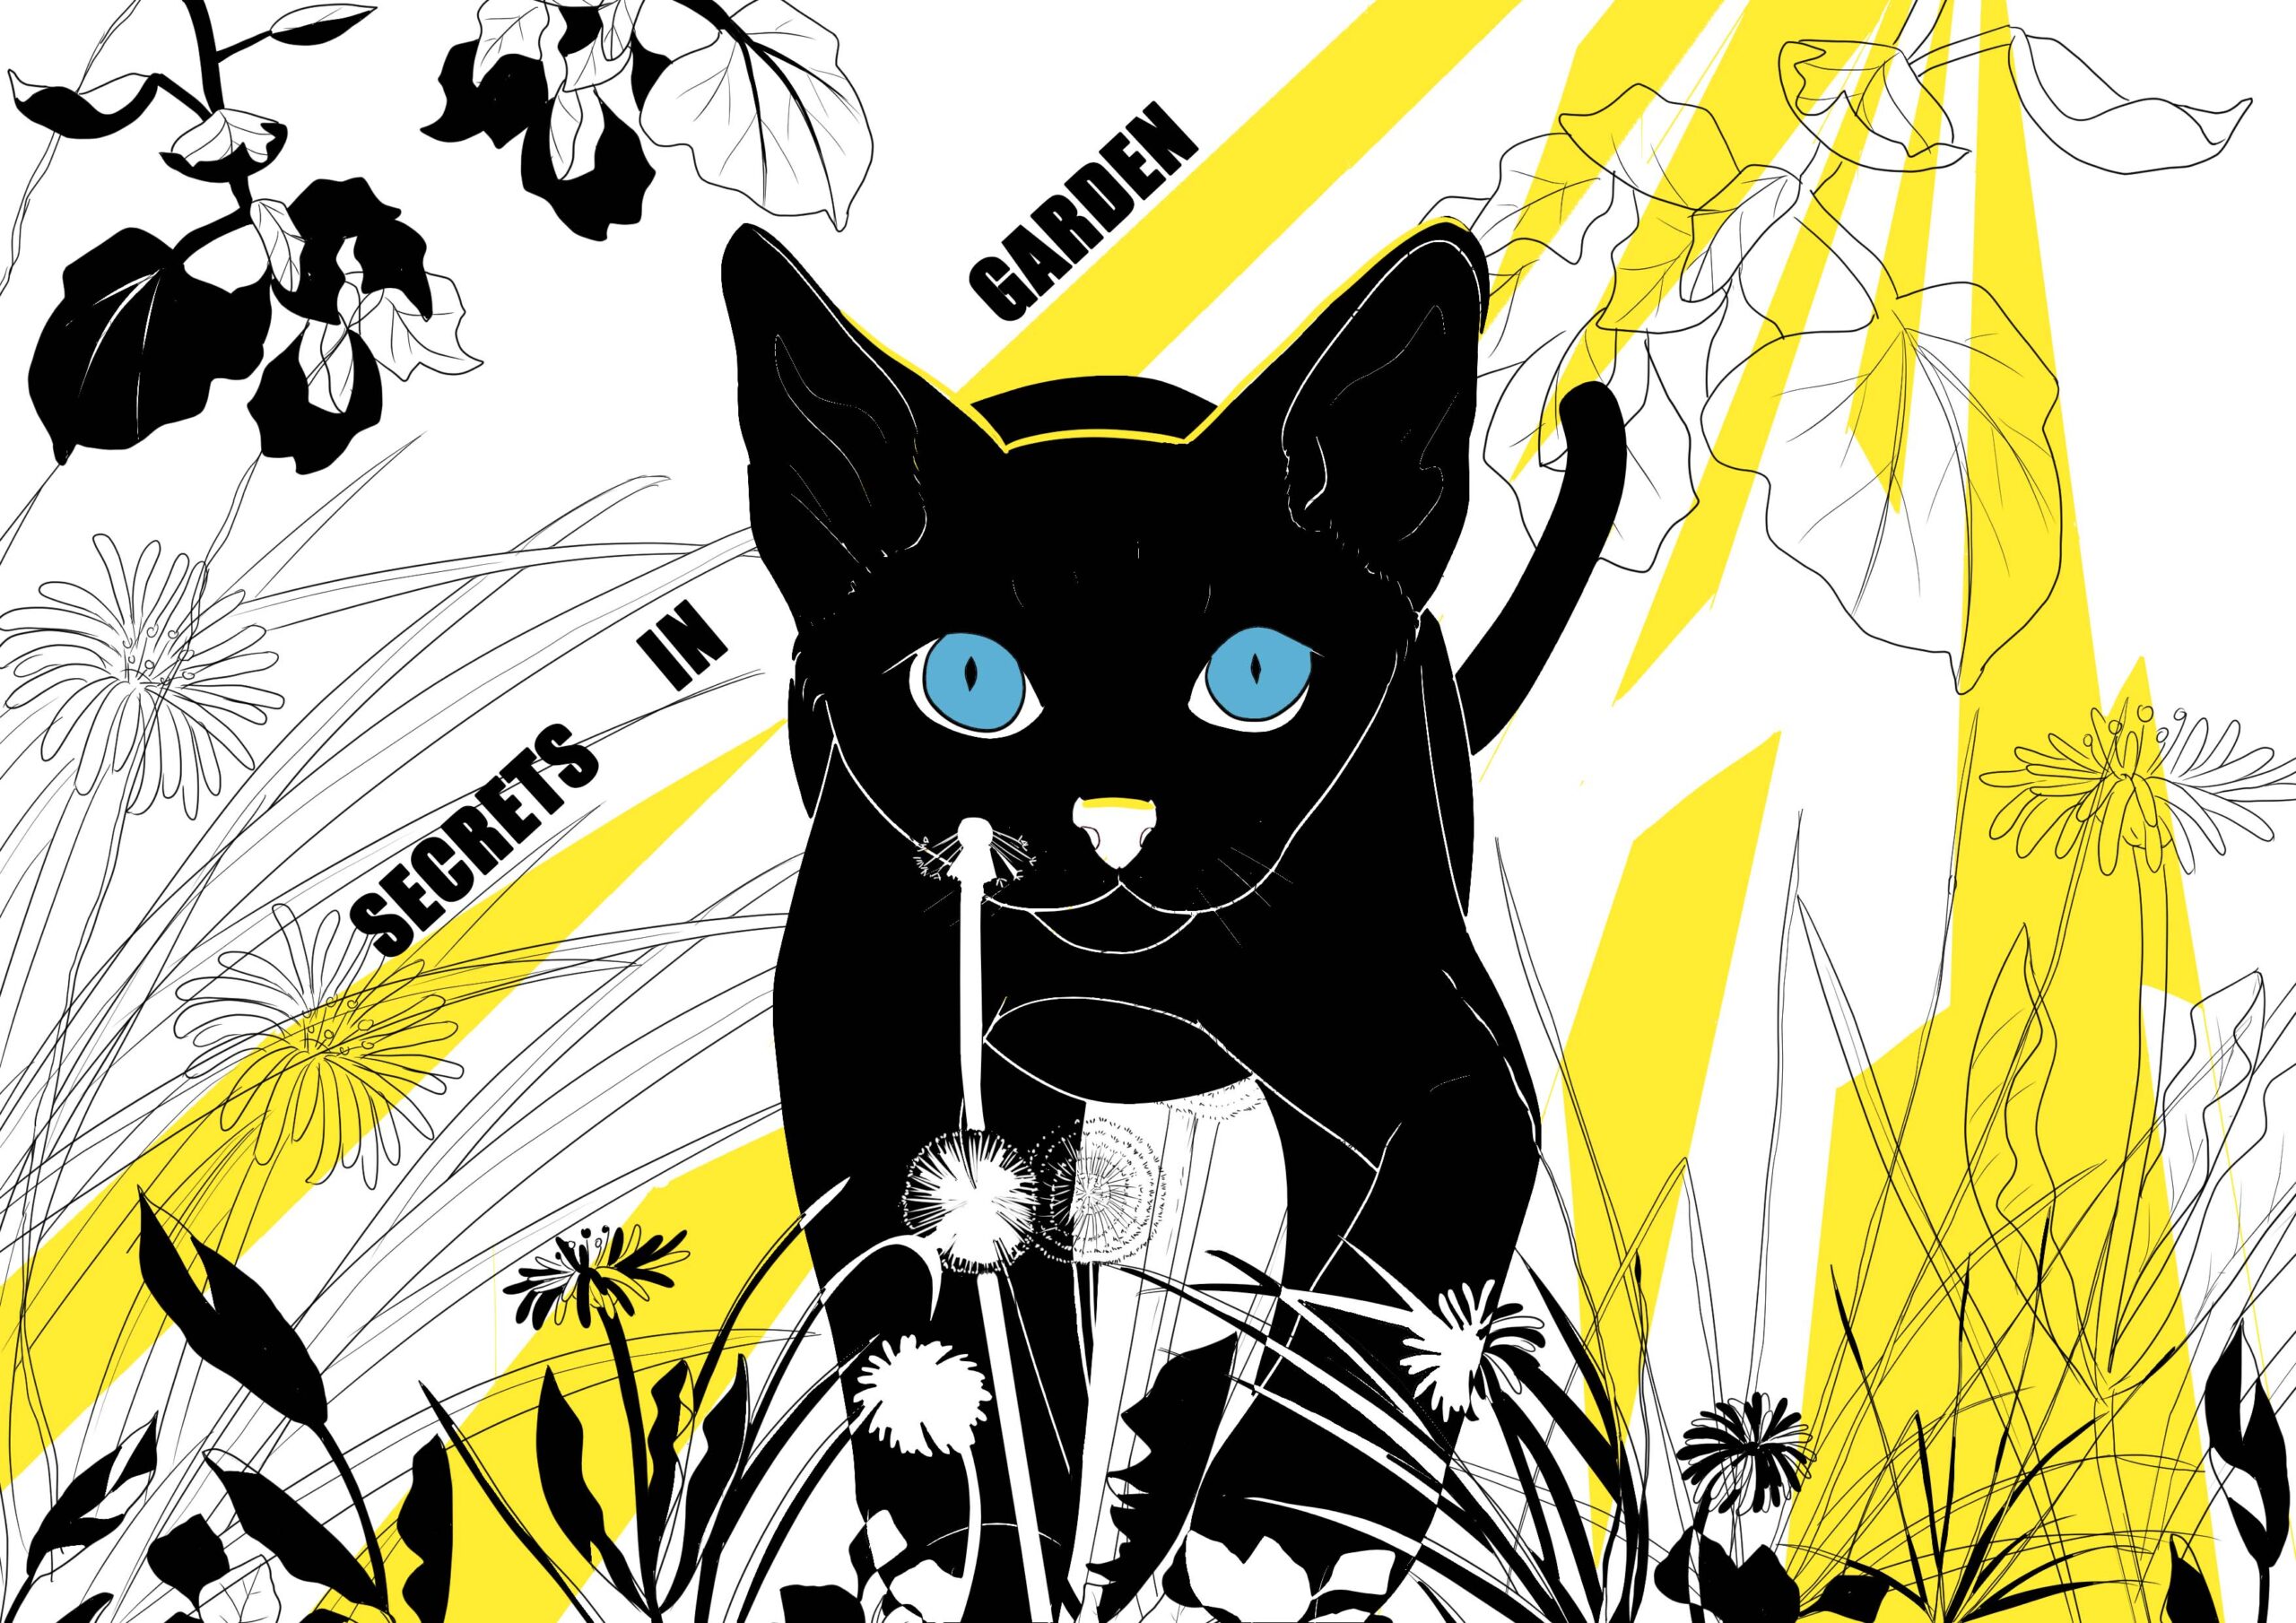 Illustration of black cat with blue eyes